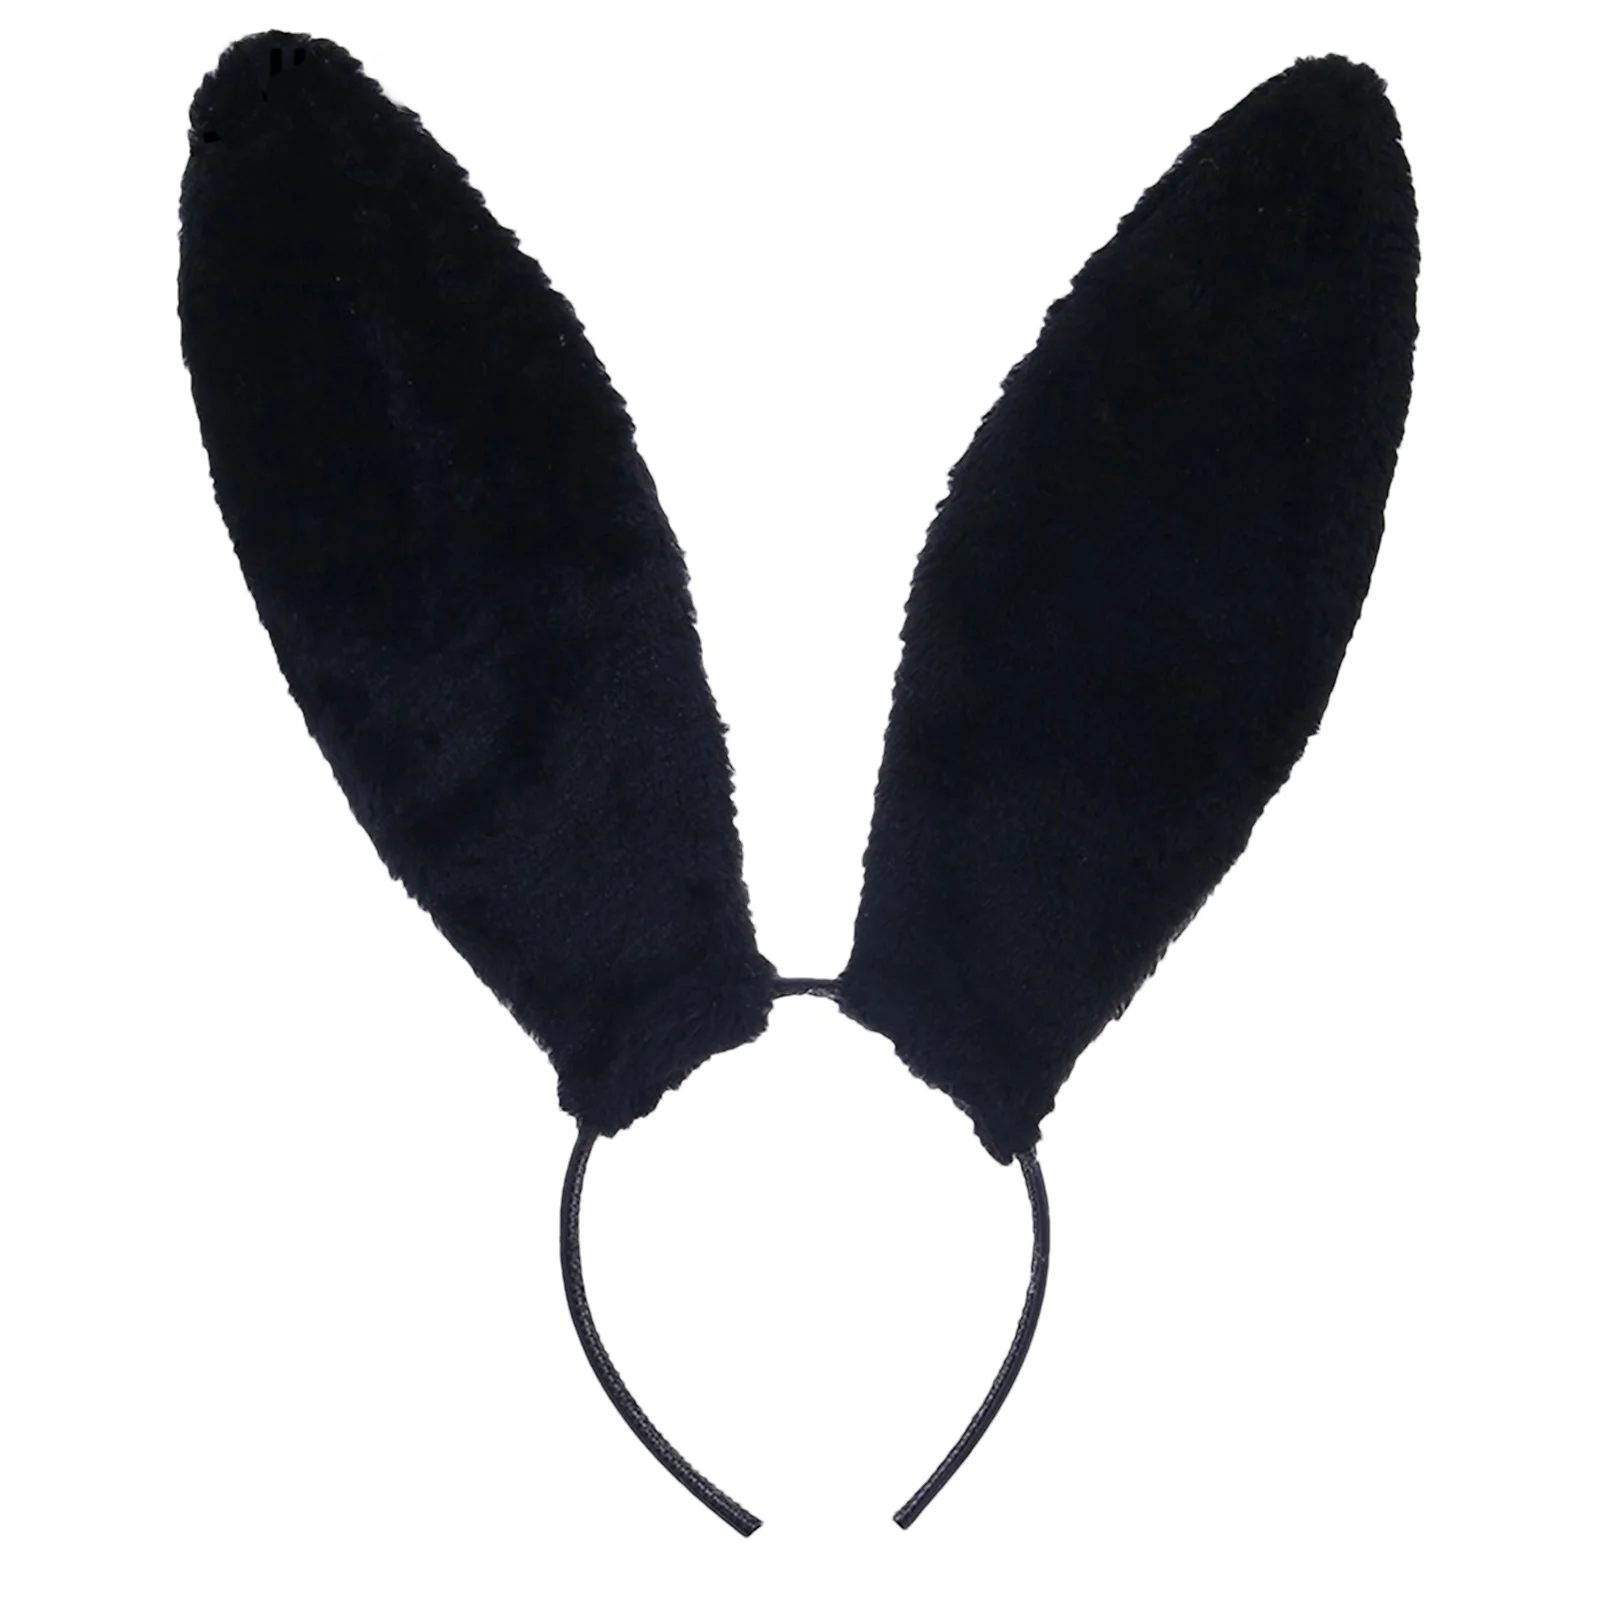 

Black Big Bunny Ears Headband For Easter Halloween Party Costume Accessories Easter Nightclub Sweet Sexy Bunny Ear Hair